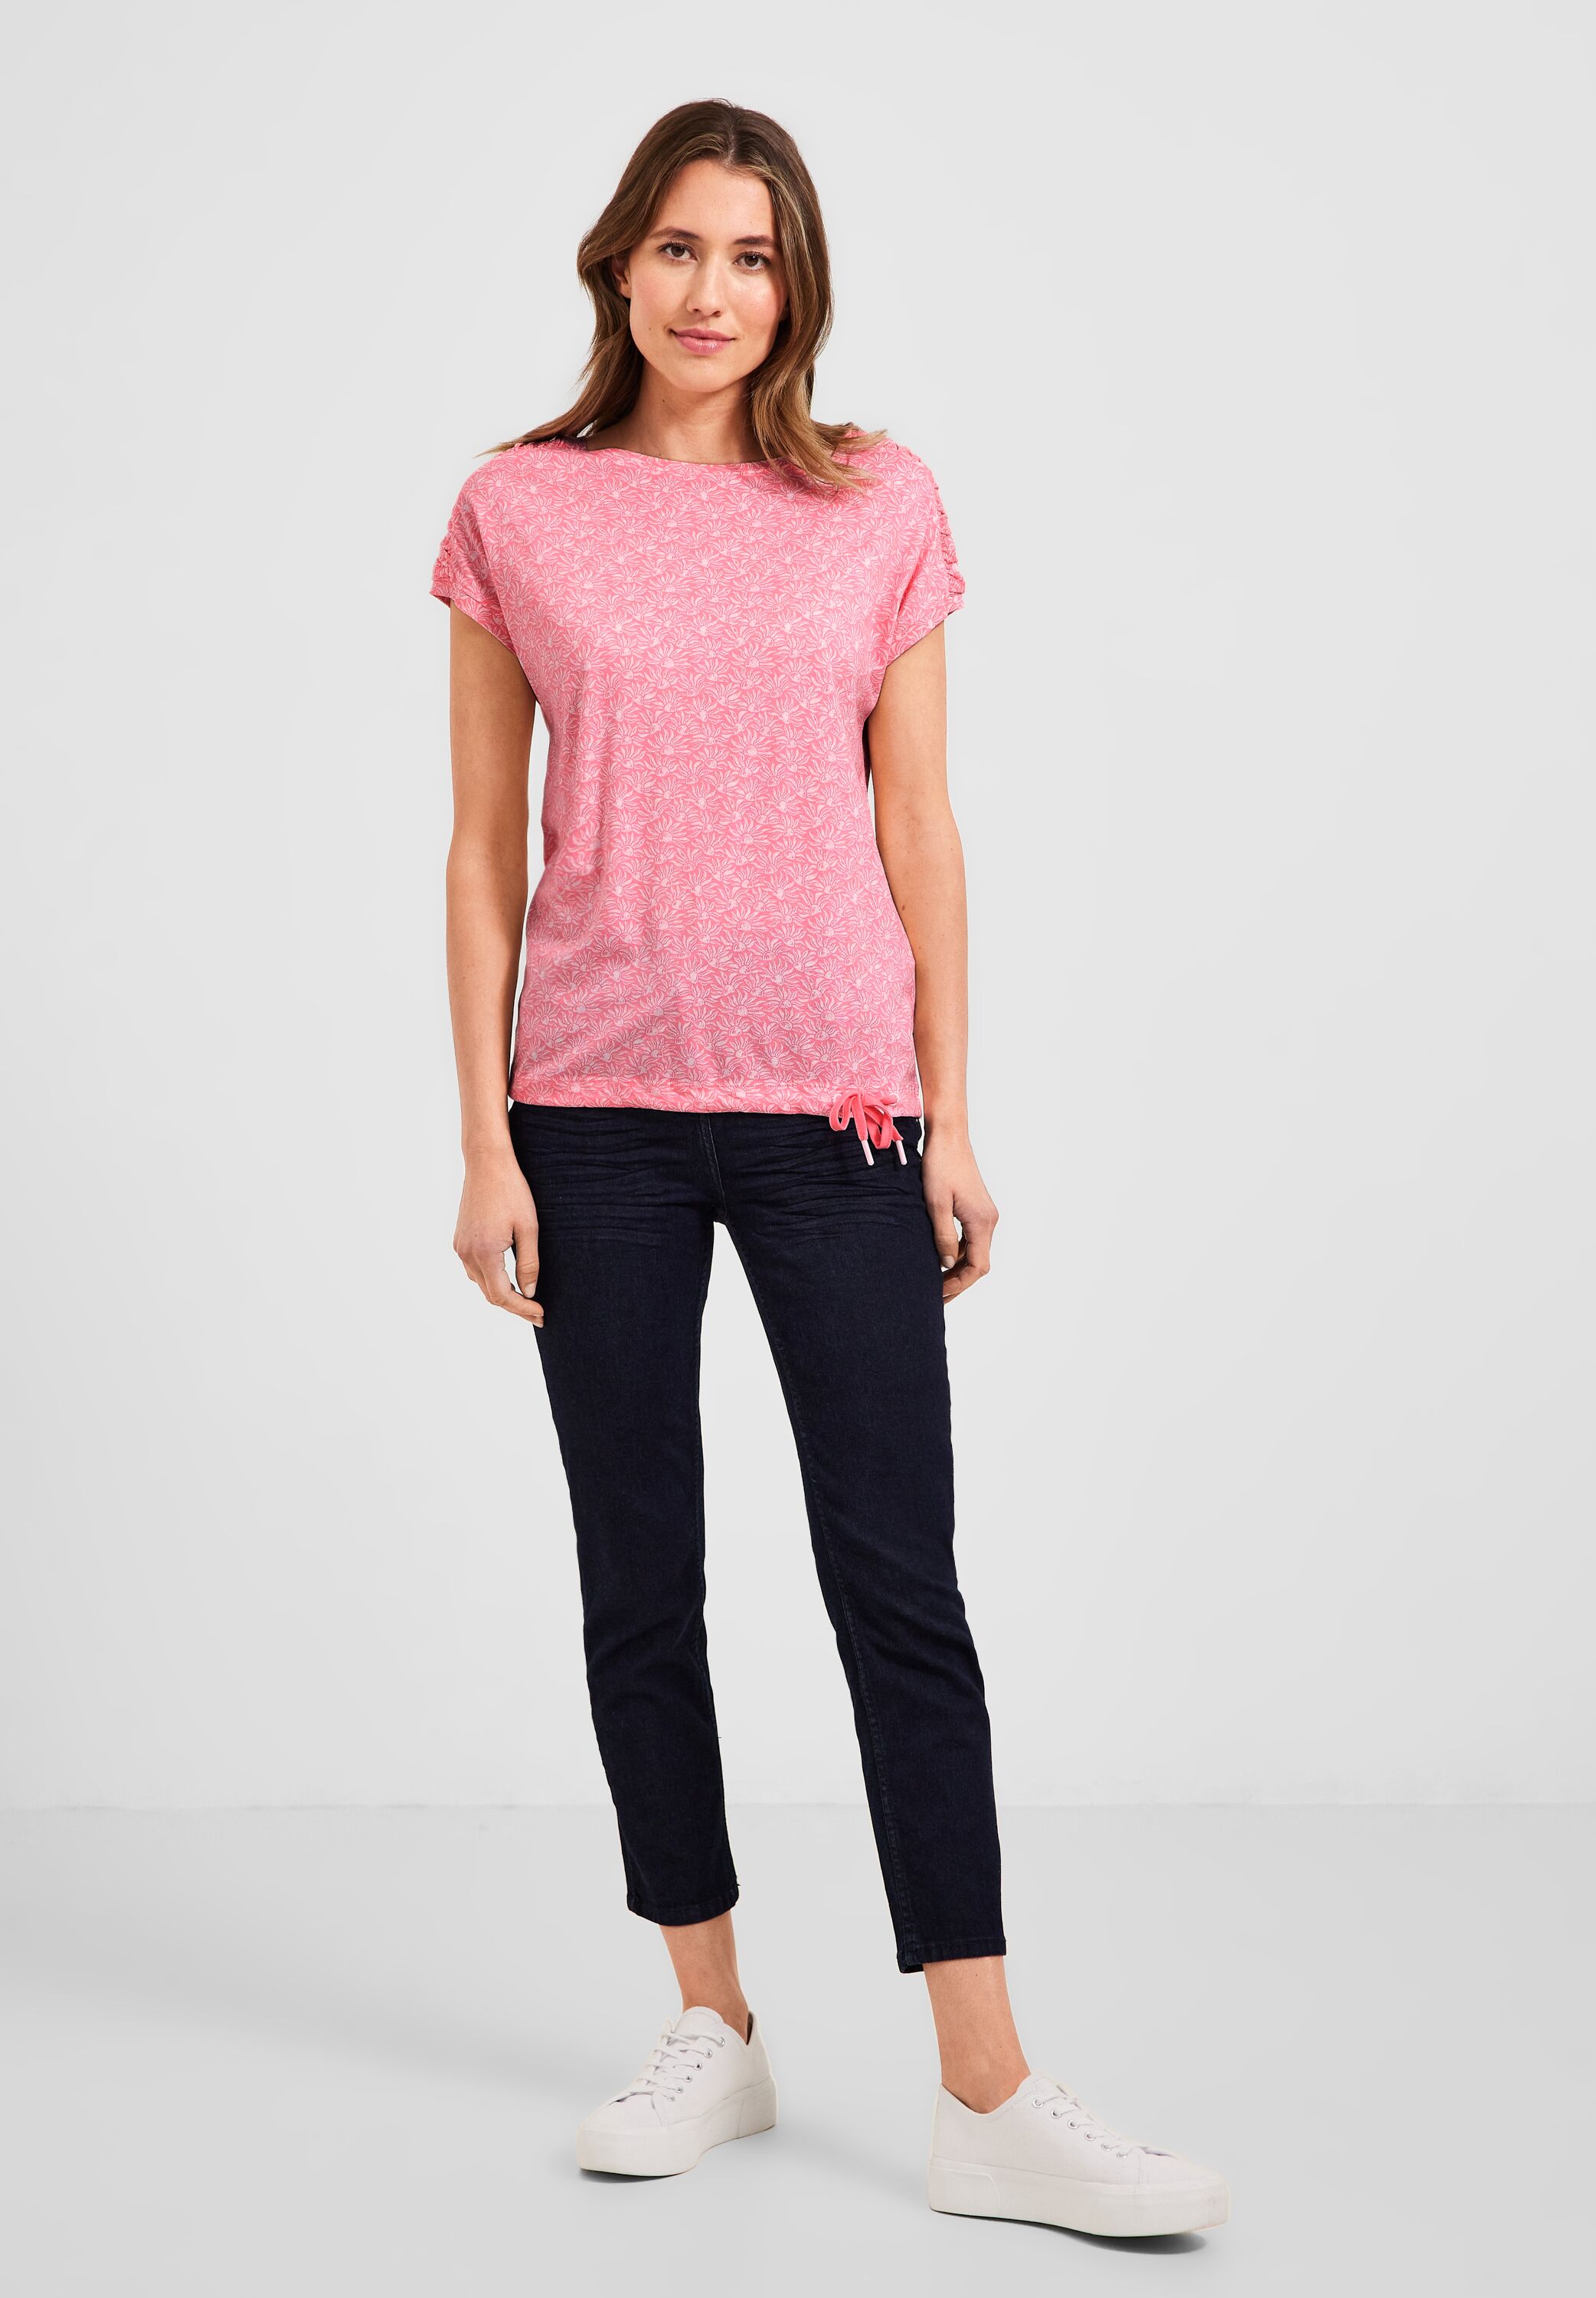 CONCEPT CECIL Soft B320030-25030 im reduziert Pink in T-Shirt - SALE Mode